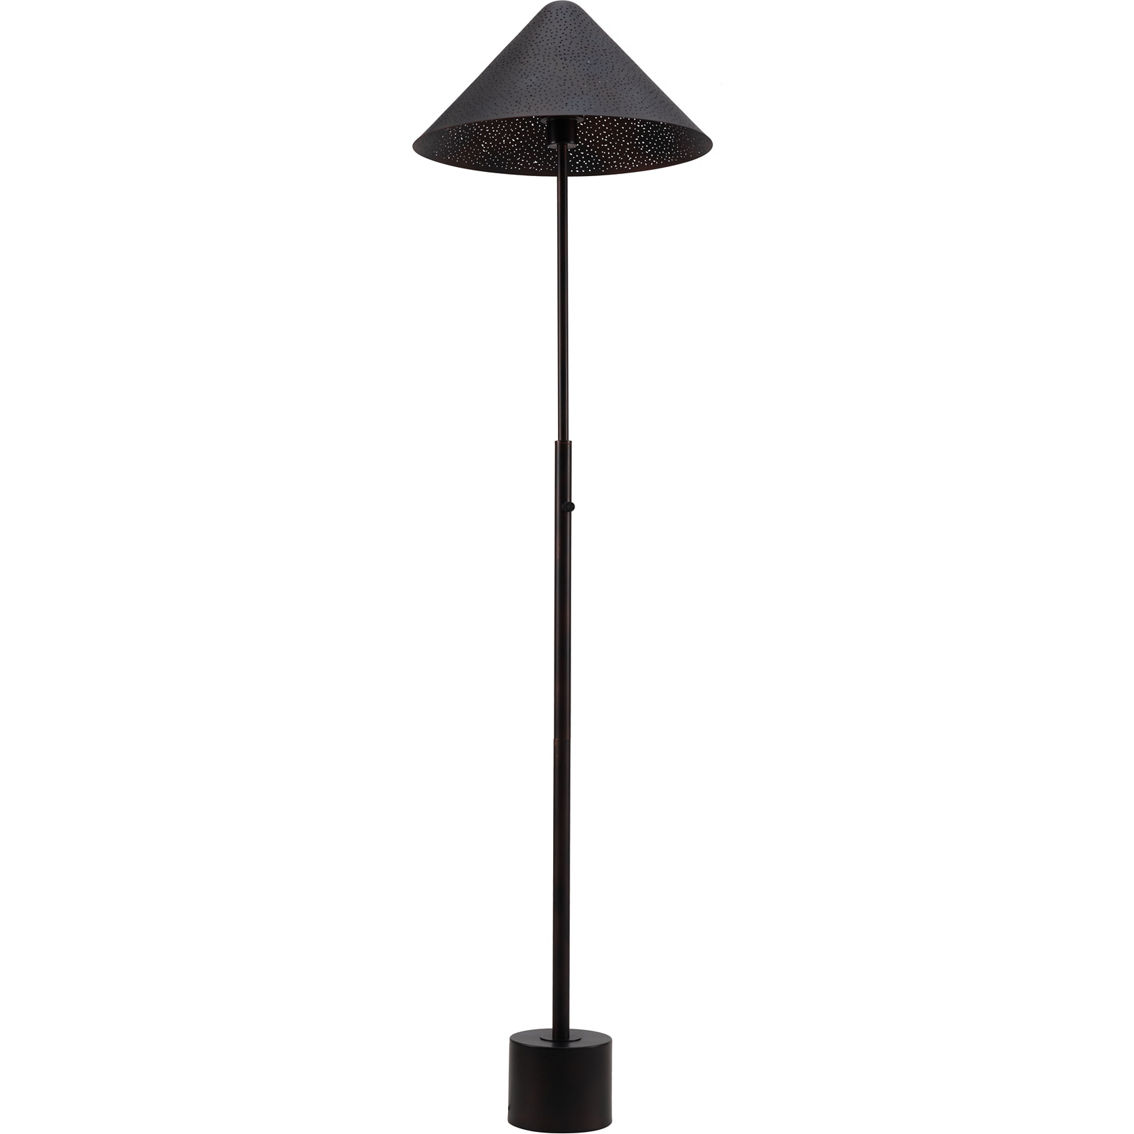 Zuo Modern Cardo Floor Lamp, Bronze - Image 4 of 8